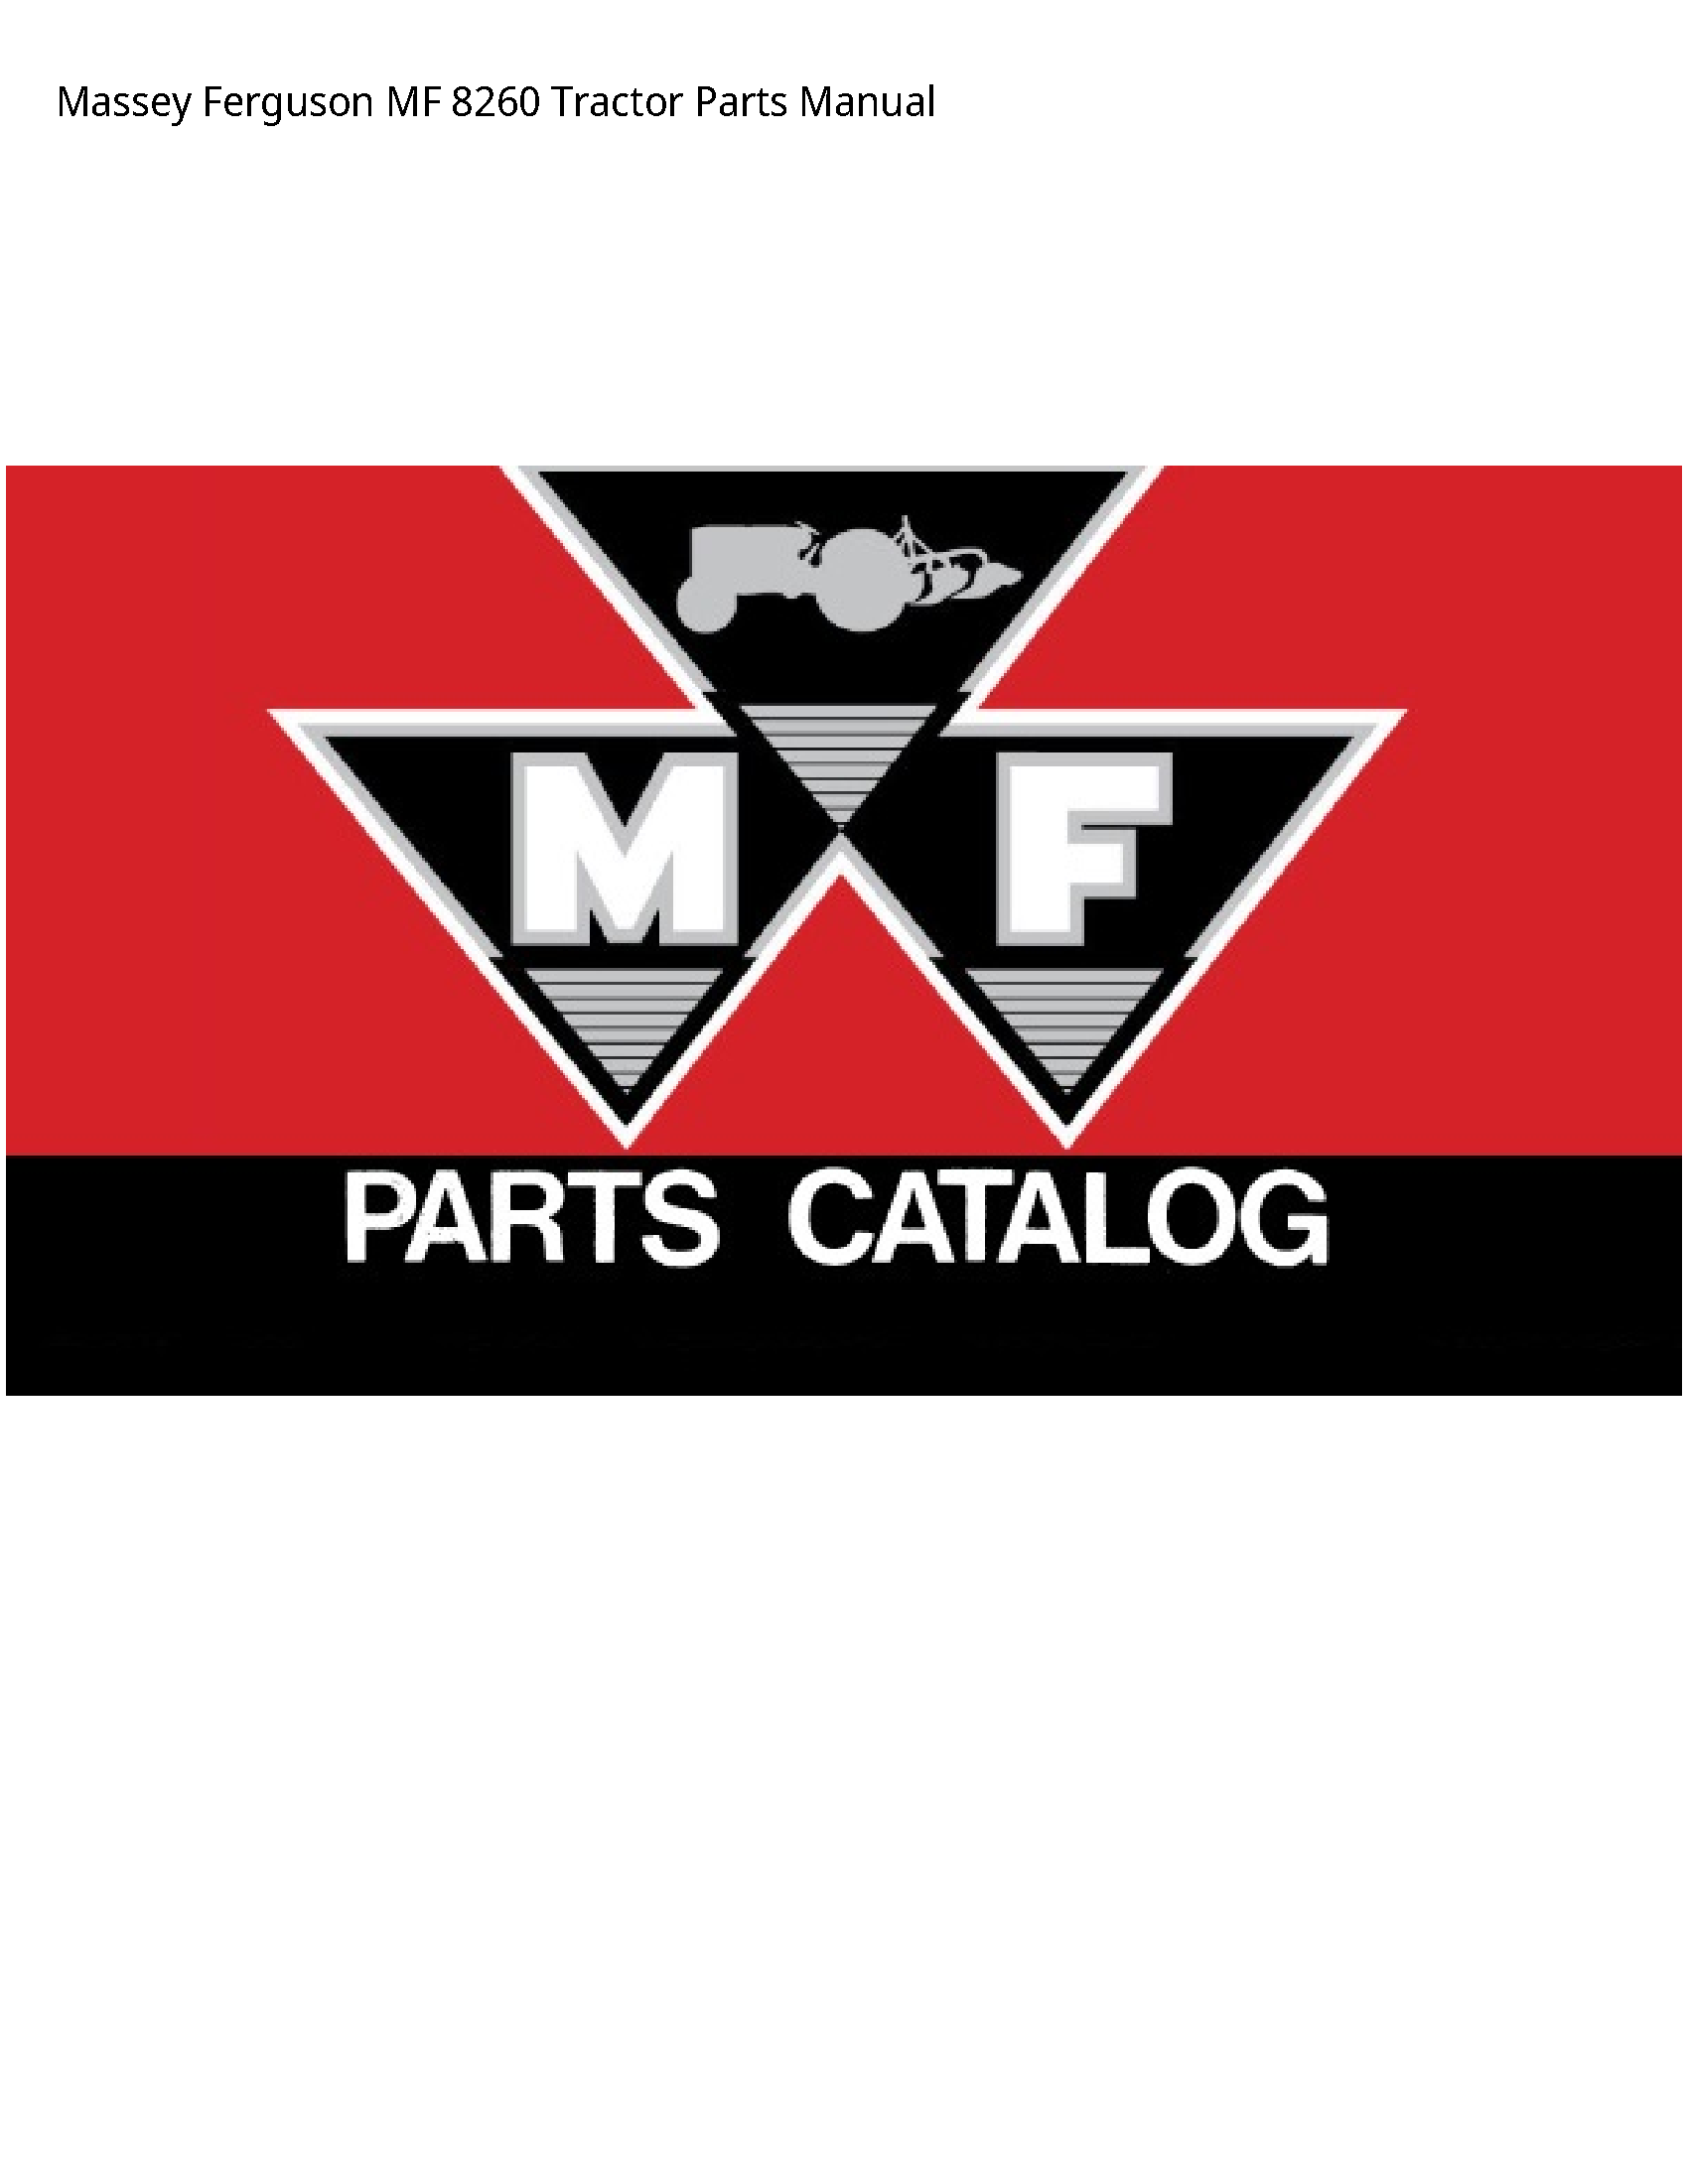 Massey Ferguson 8260 MF Tractor Parts manual